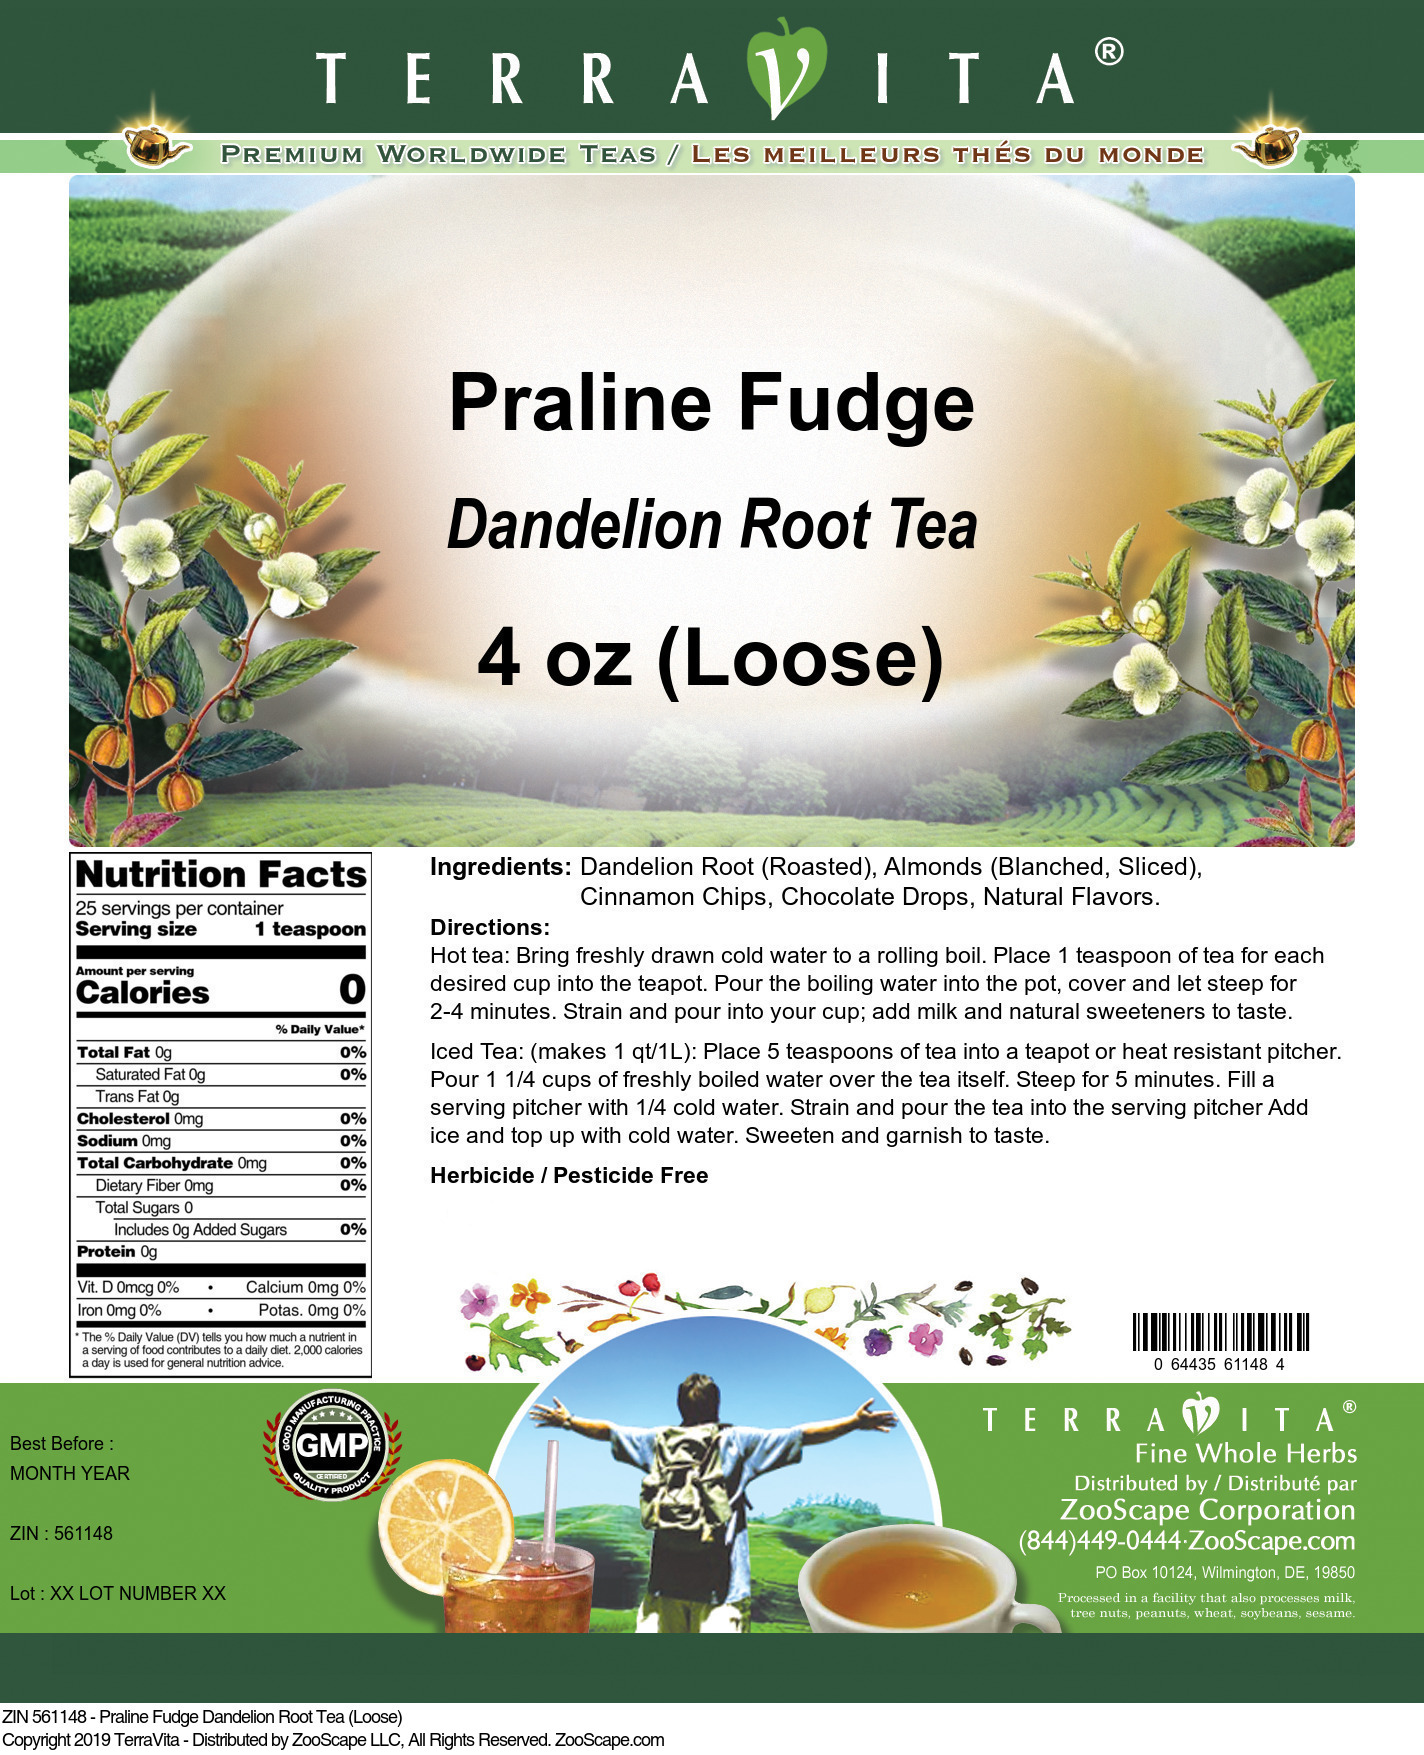 Praline Fudge Dandelion Root Tea (Loose) - Label